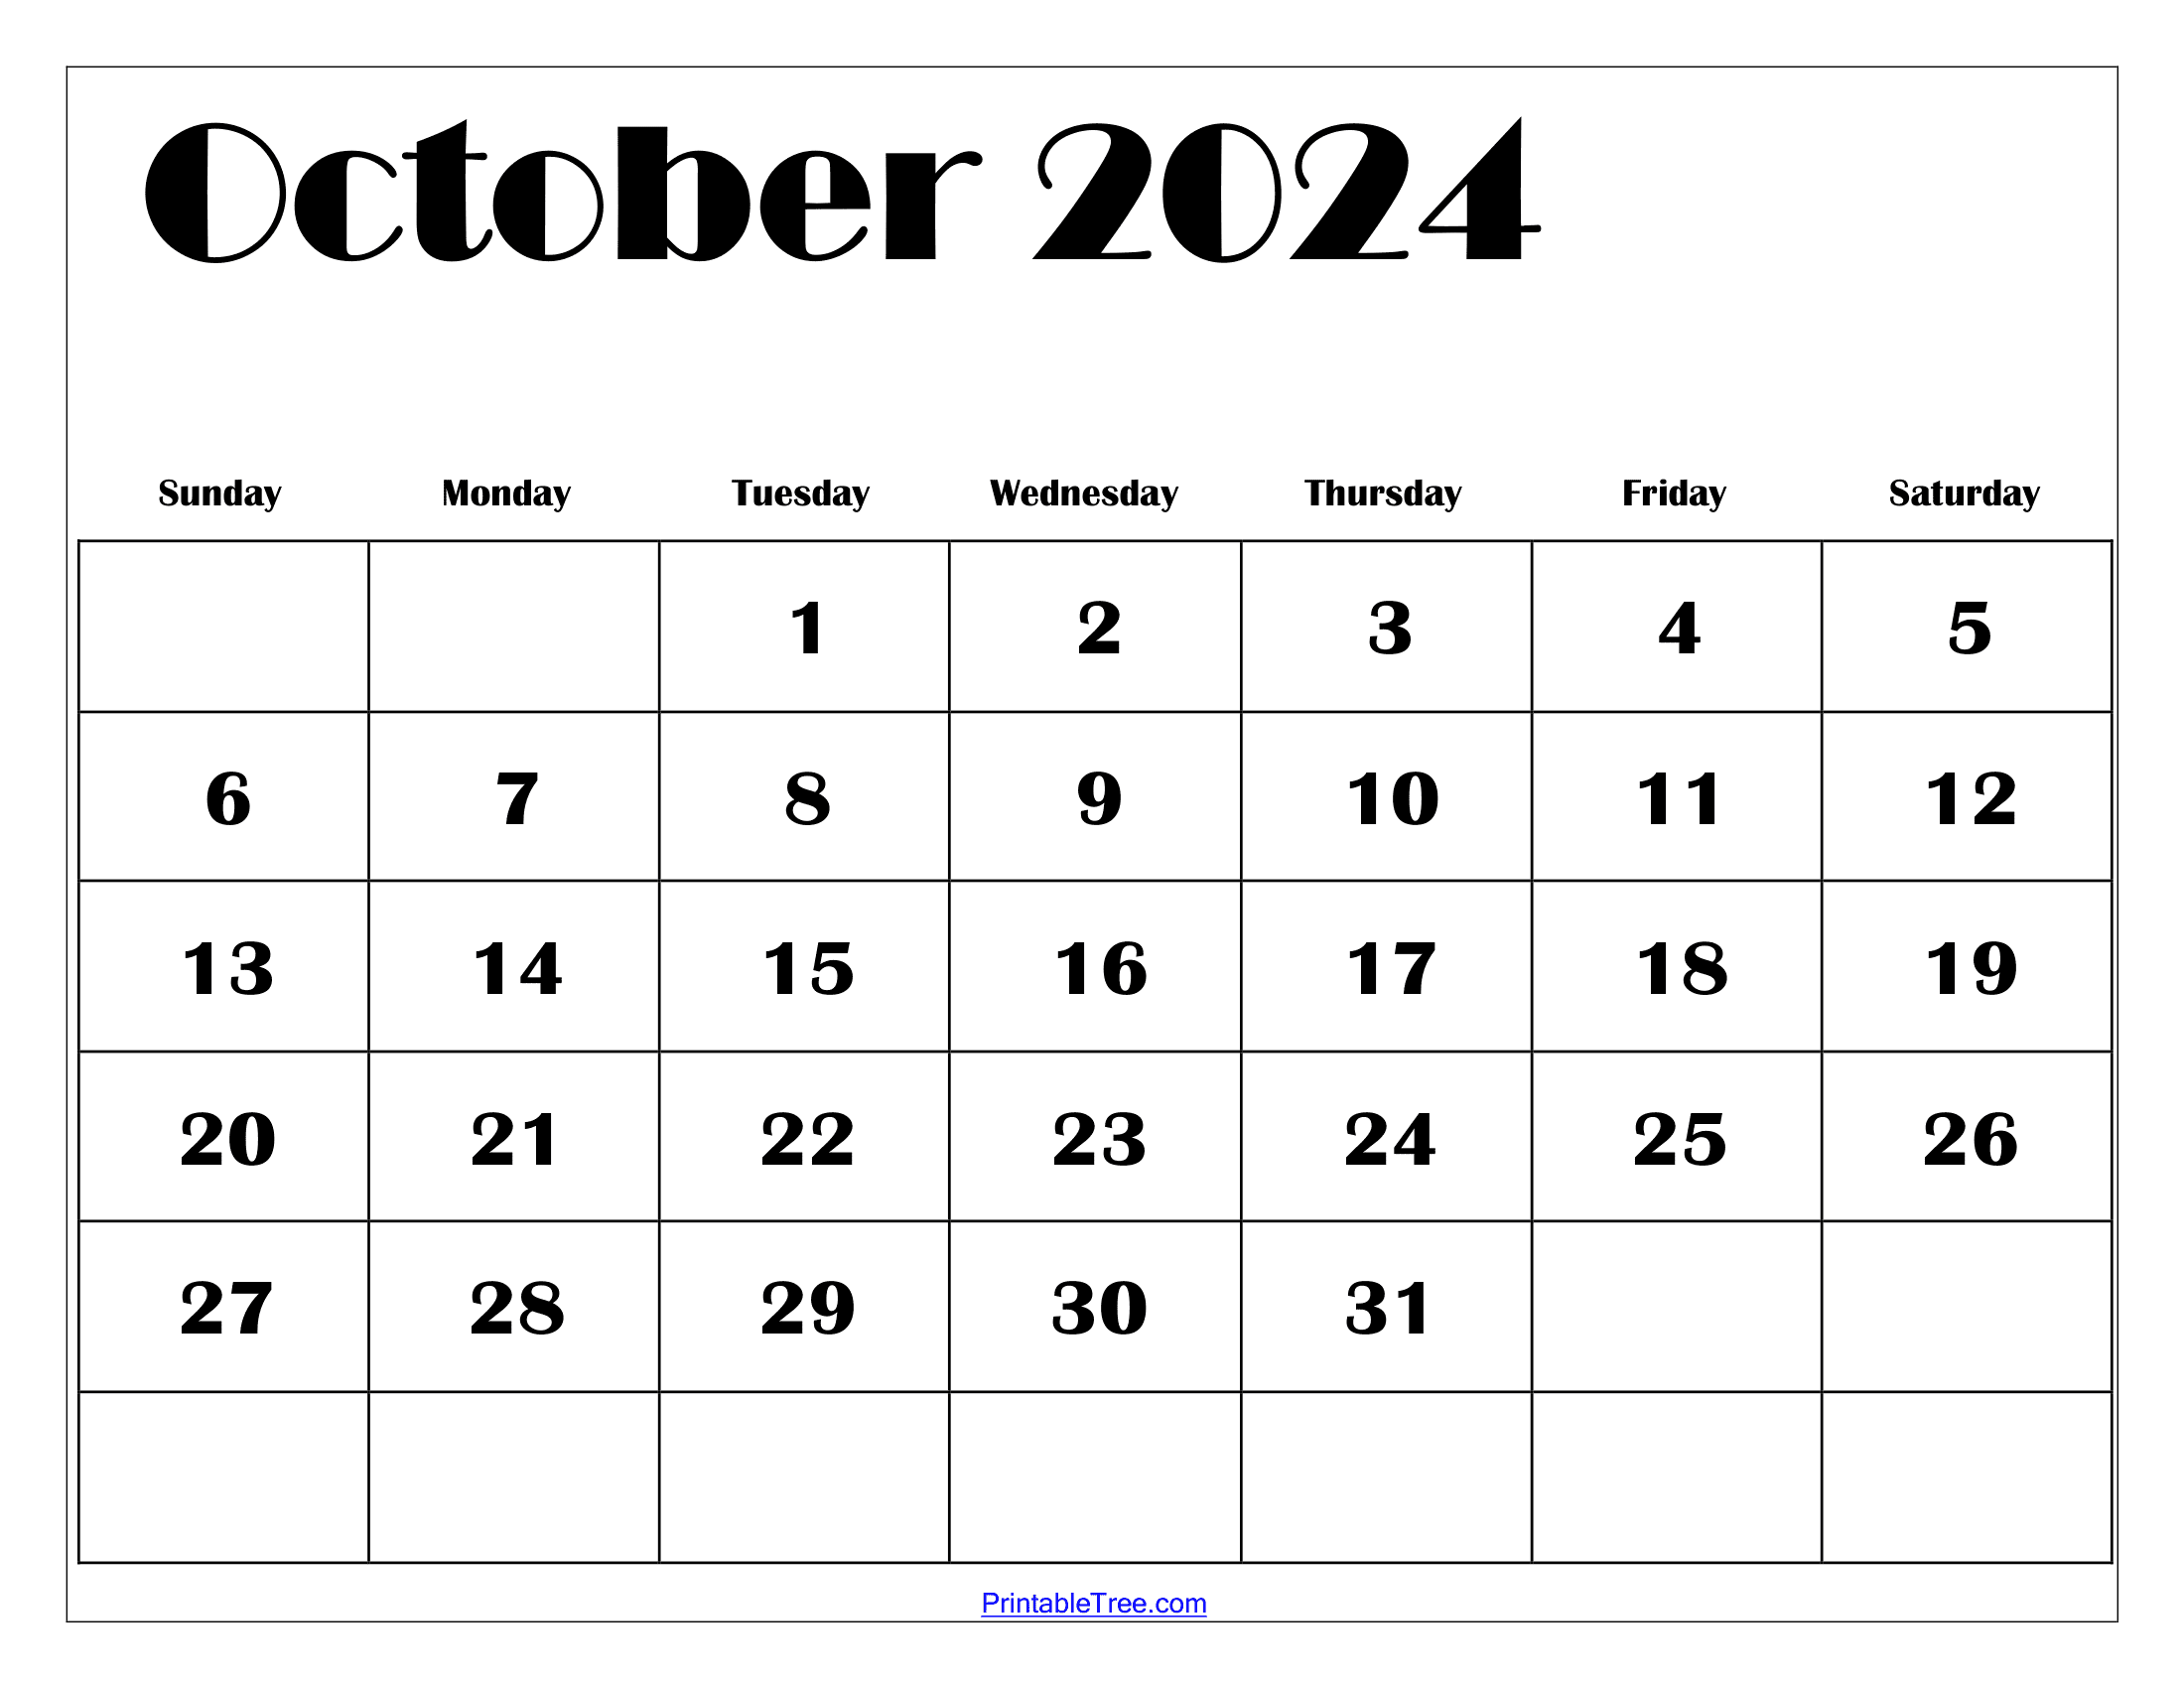 October 2024 Calendar Printable Pdf Free Templates With Holidays for 2024 Calendar Printable October